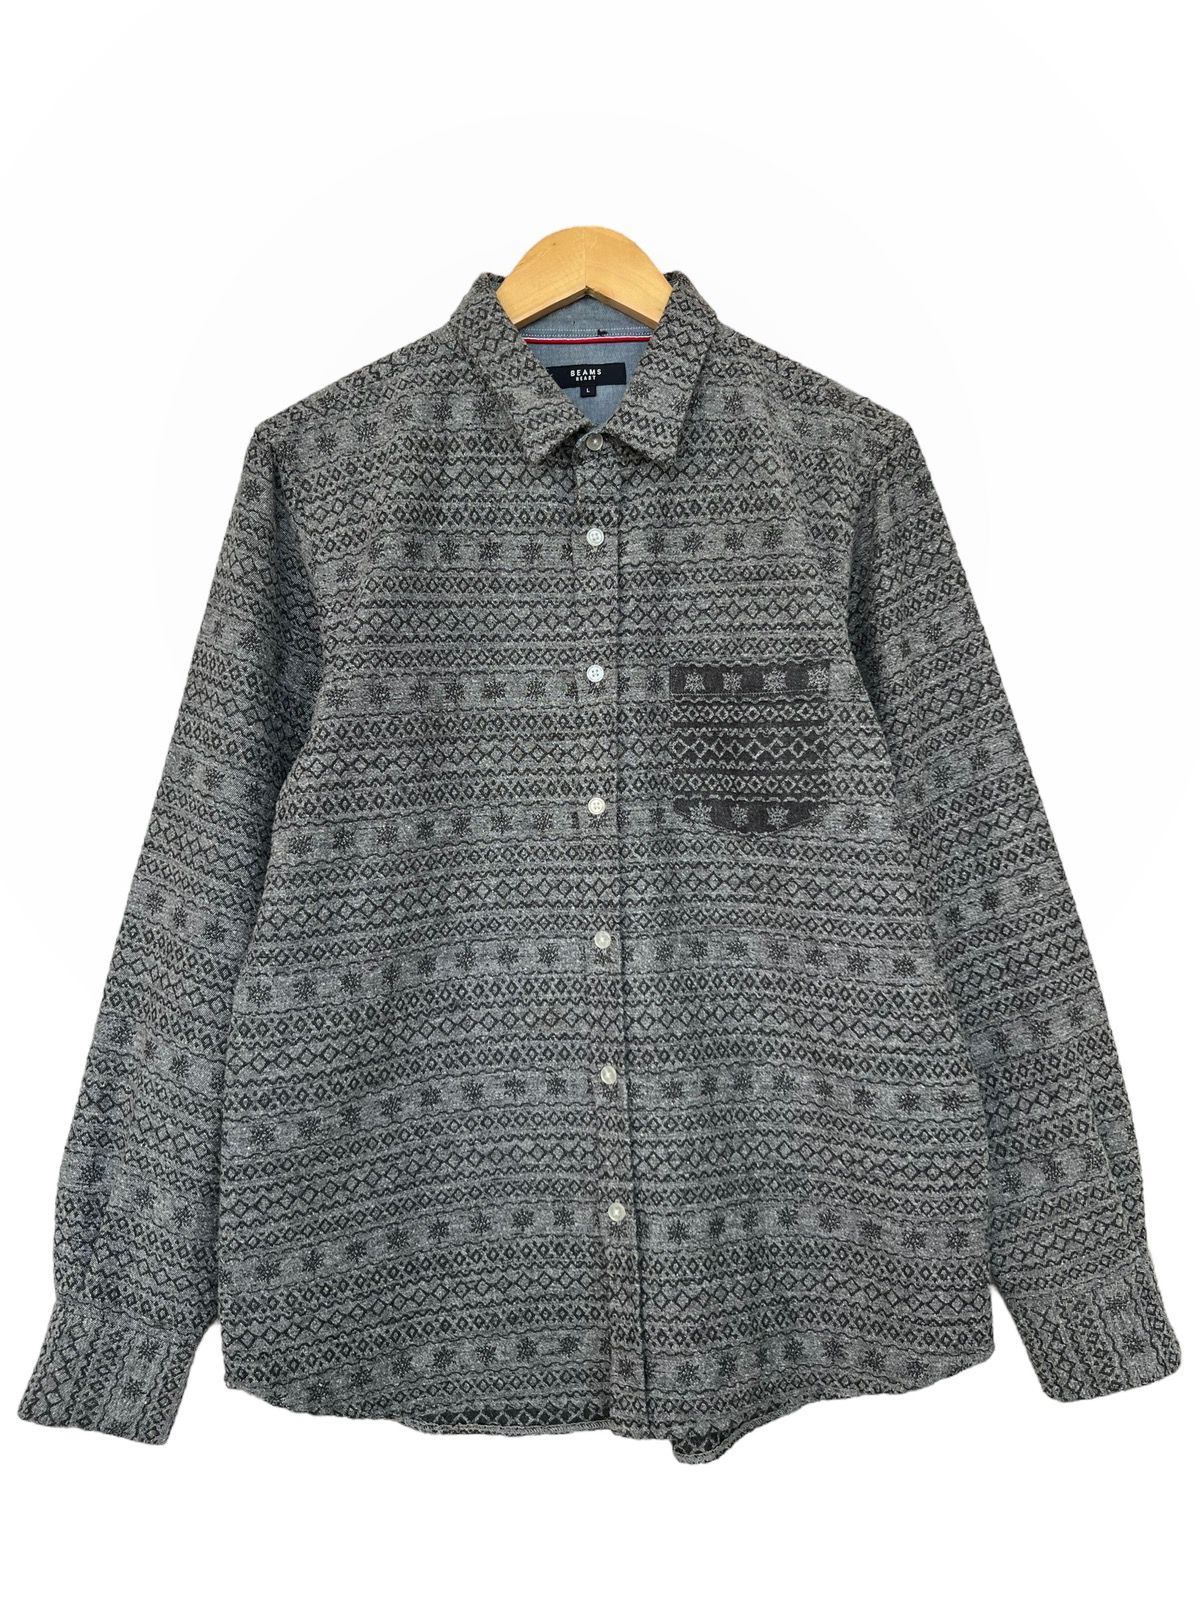 Beams Japan Checkered Long Sleeve Button Up Flanner Shirt M - 1